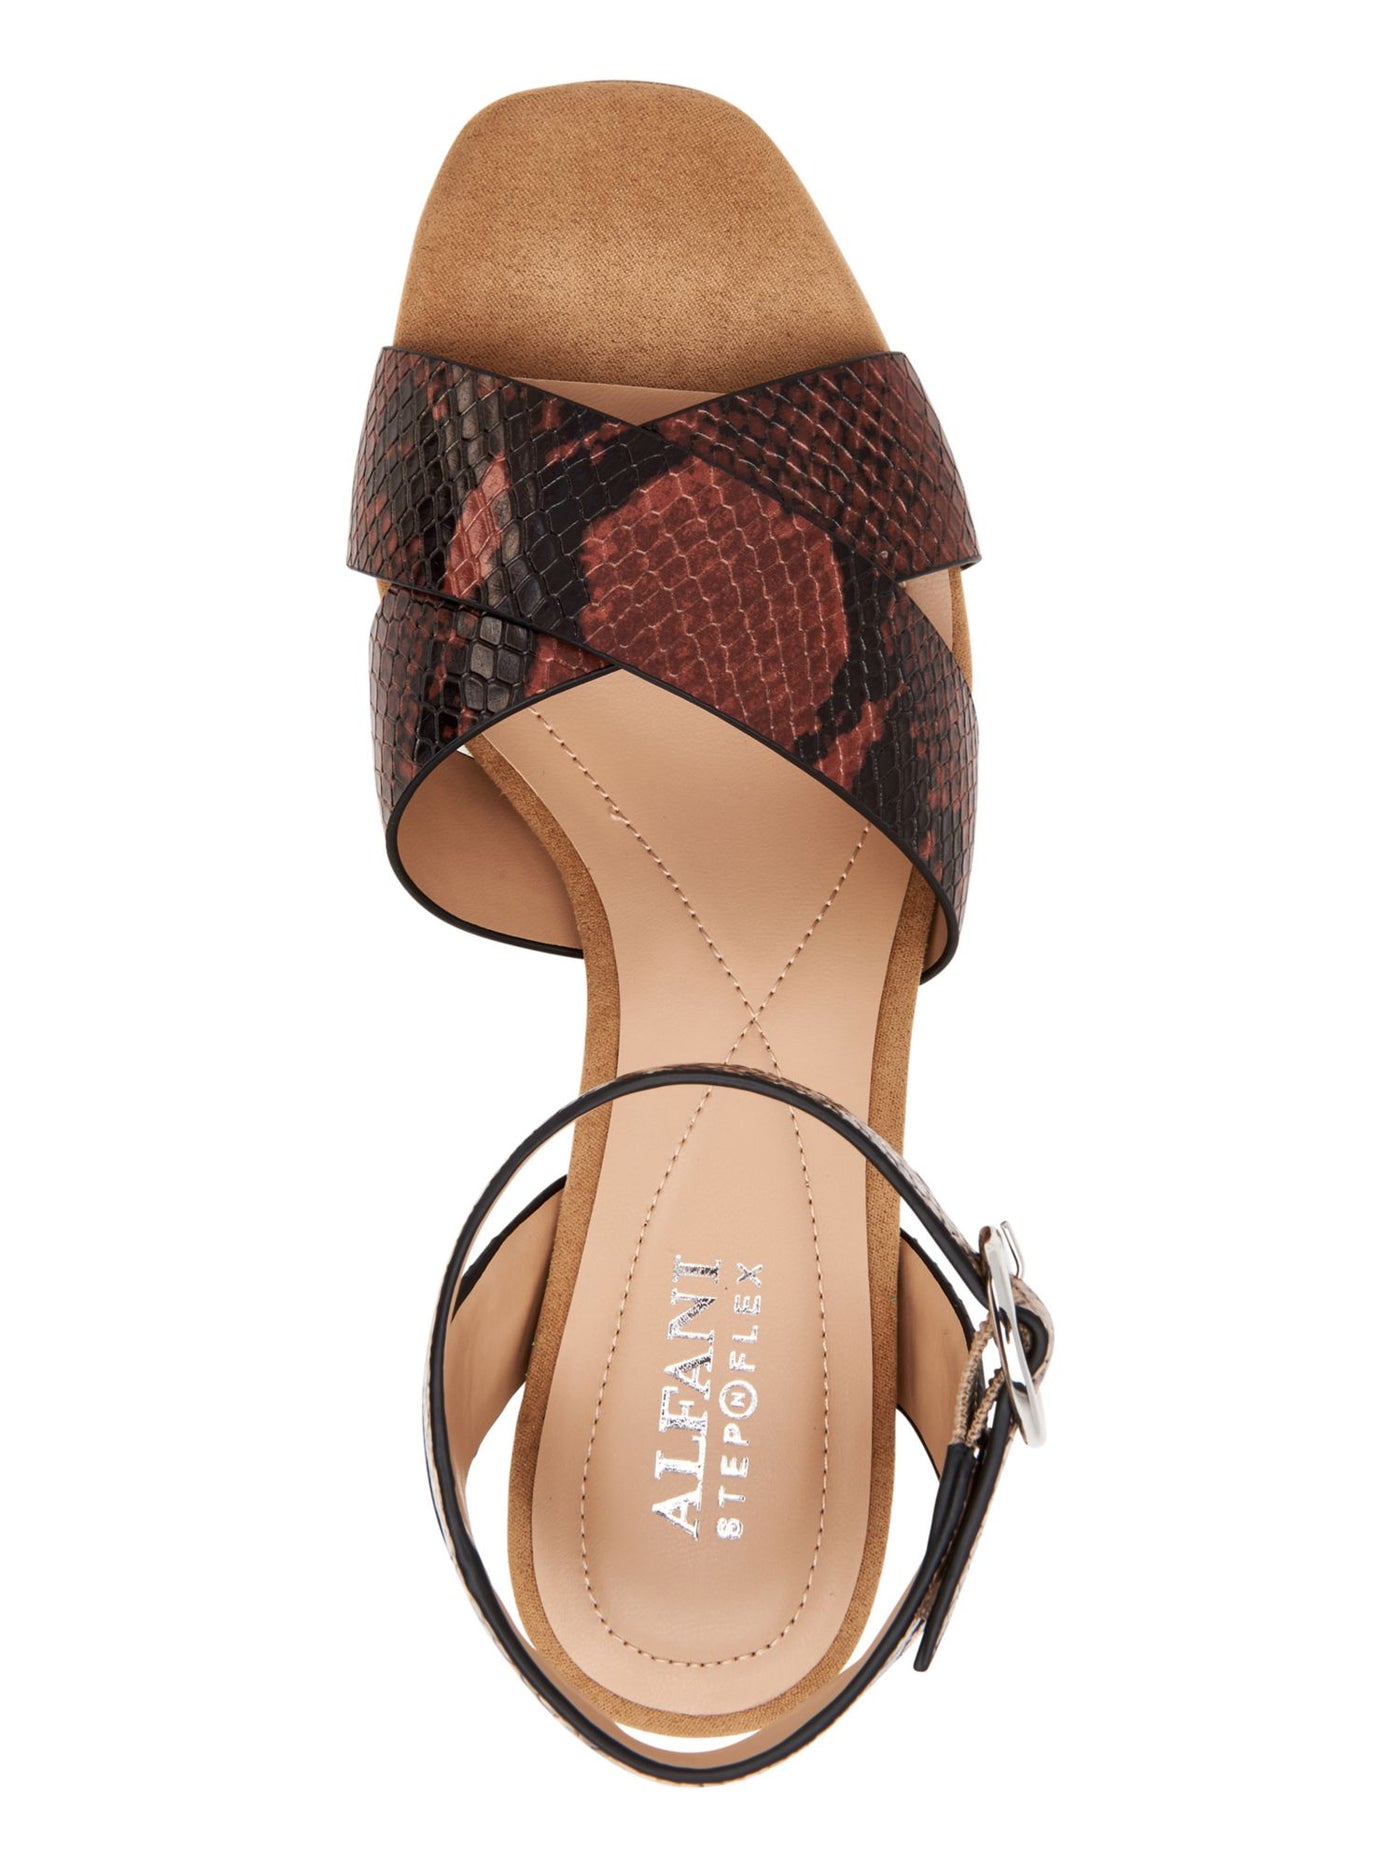 ALFANI Womens Brown Snakeskin Adjustable Comfort Cushioned Ankle Strap Irinna Square Toe Block Heel Buckle Dress Sandals Shoes 6.5 M